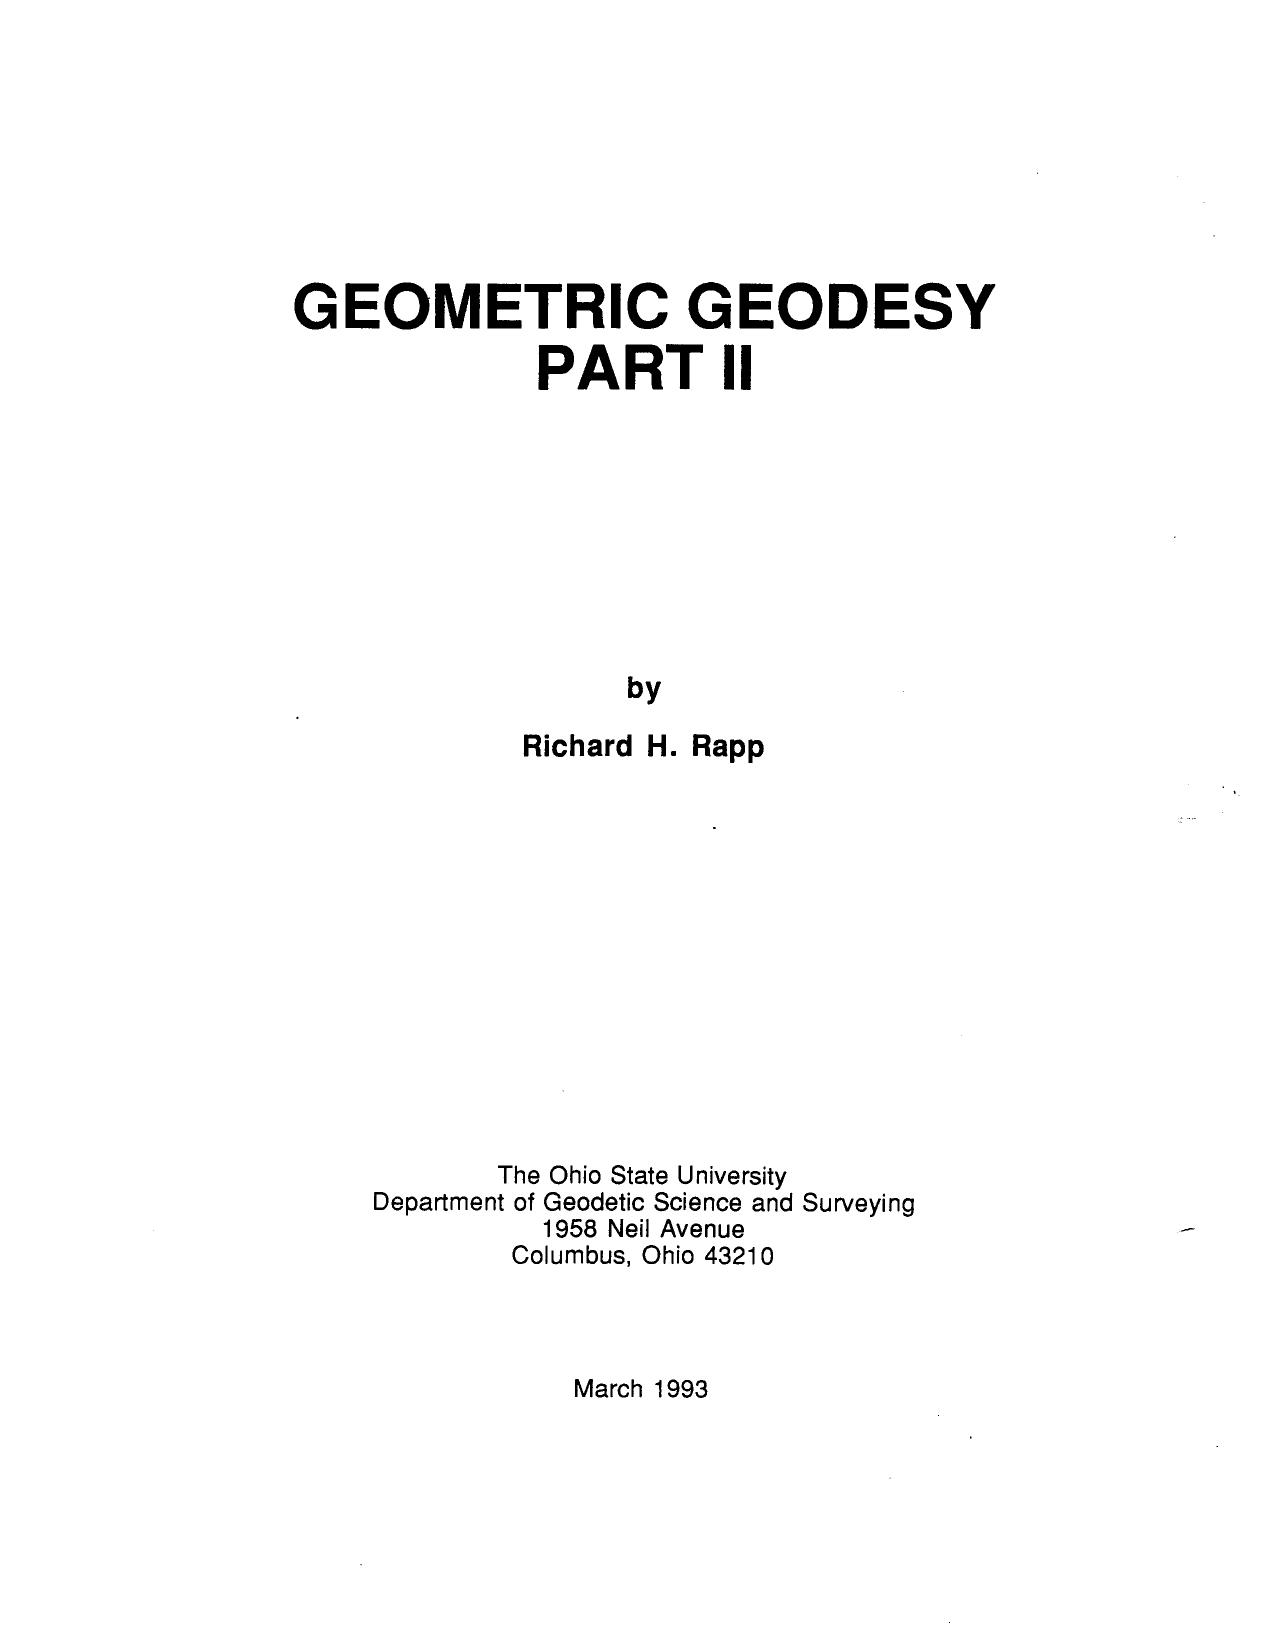 GEOMETRIC GEODESY Part 2.tif